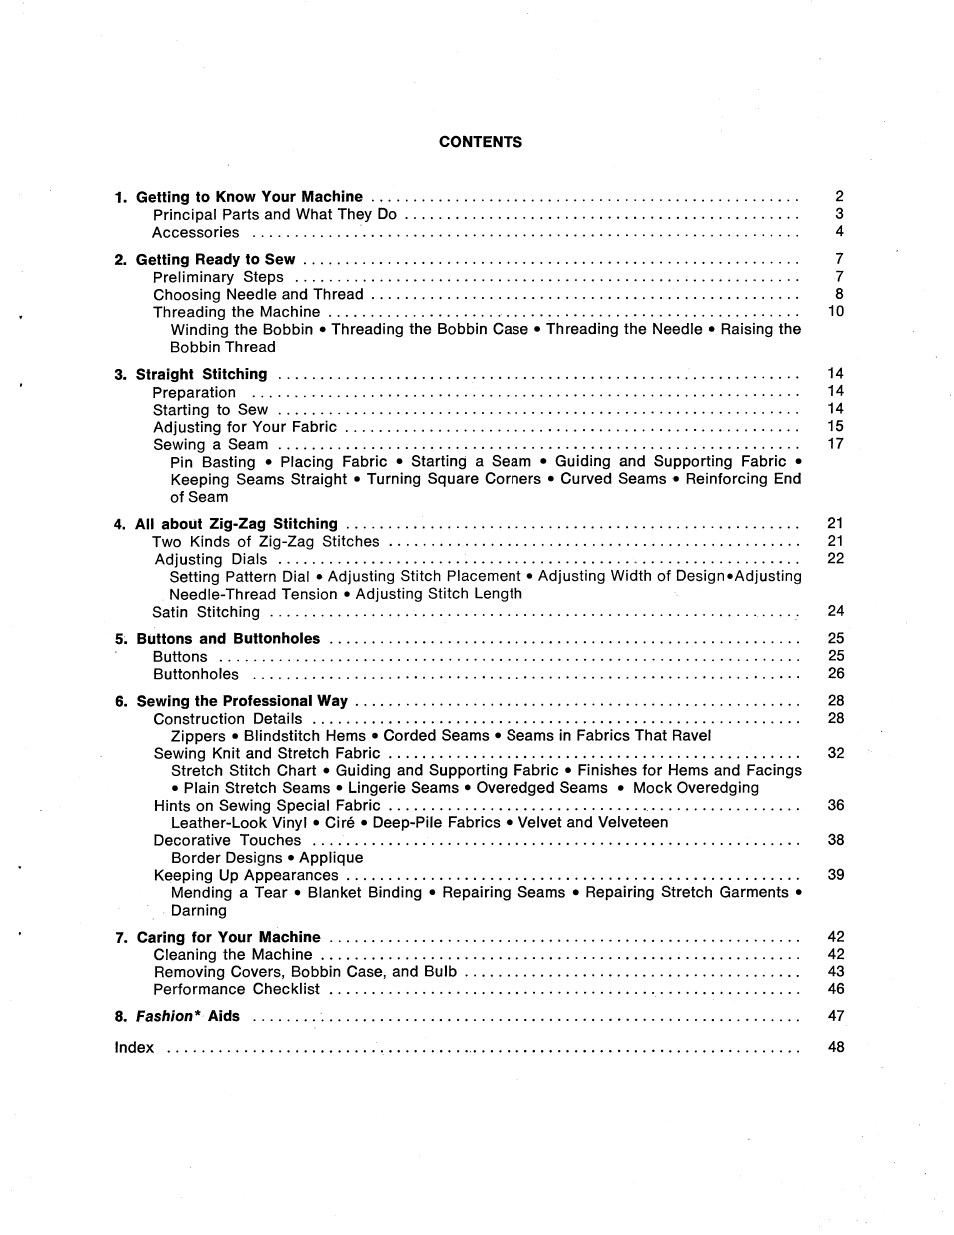 SINGER 714 Graduate User Manual | Page 3 / 52